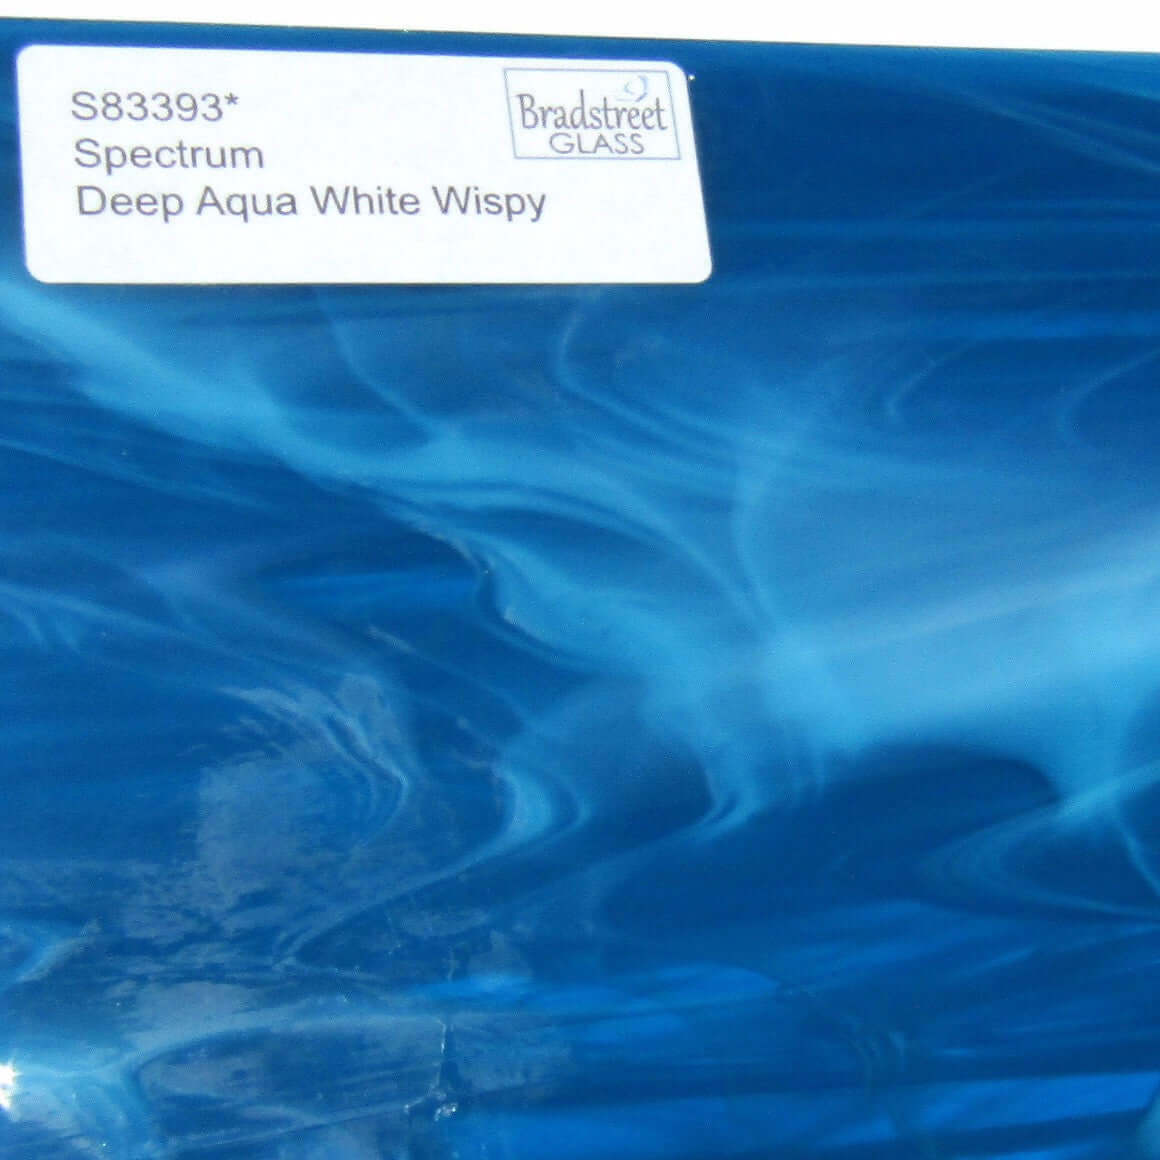 Spectrum Deep Aqua White Wispy Stained Glass Sheet S83393